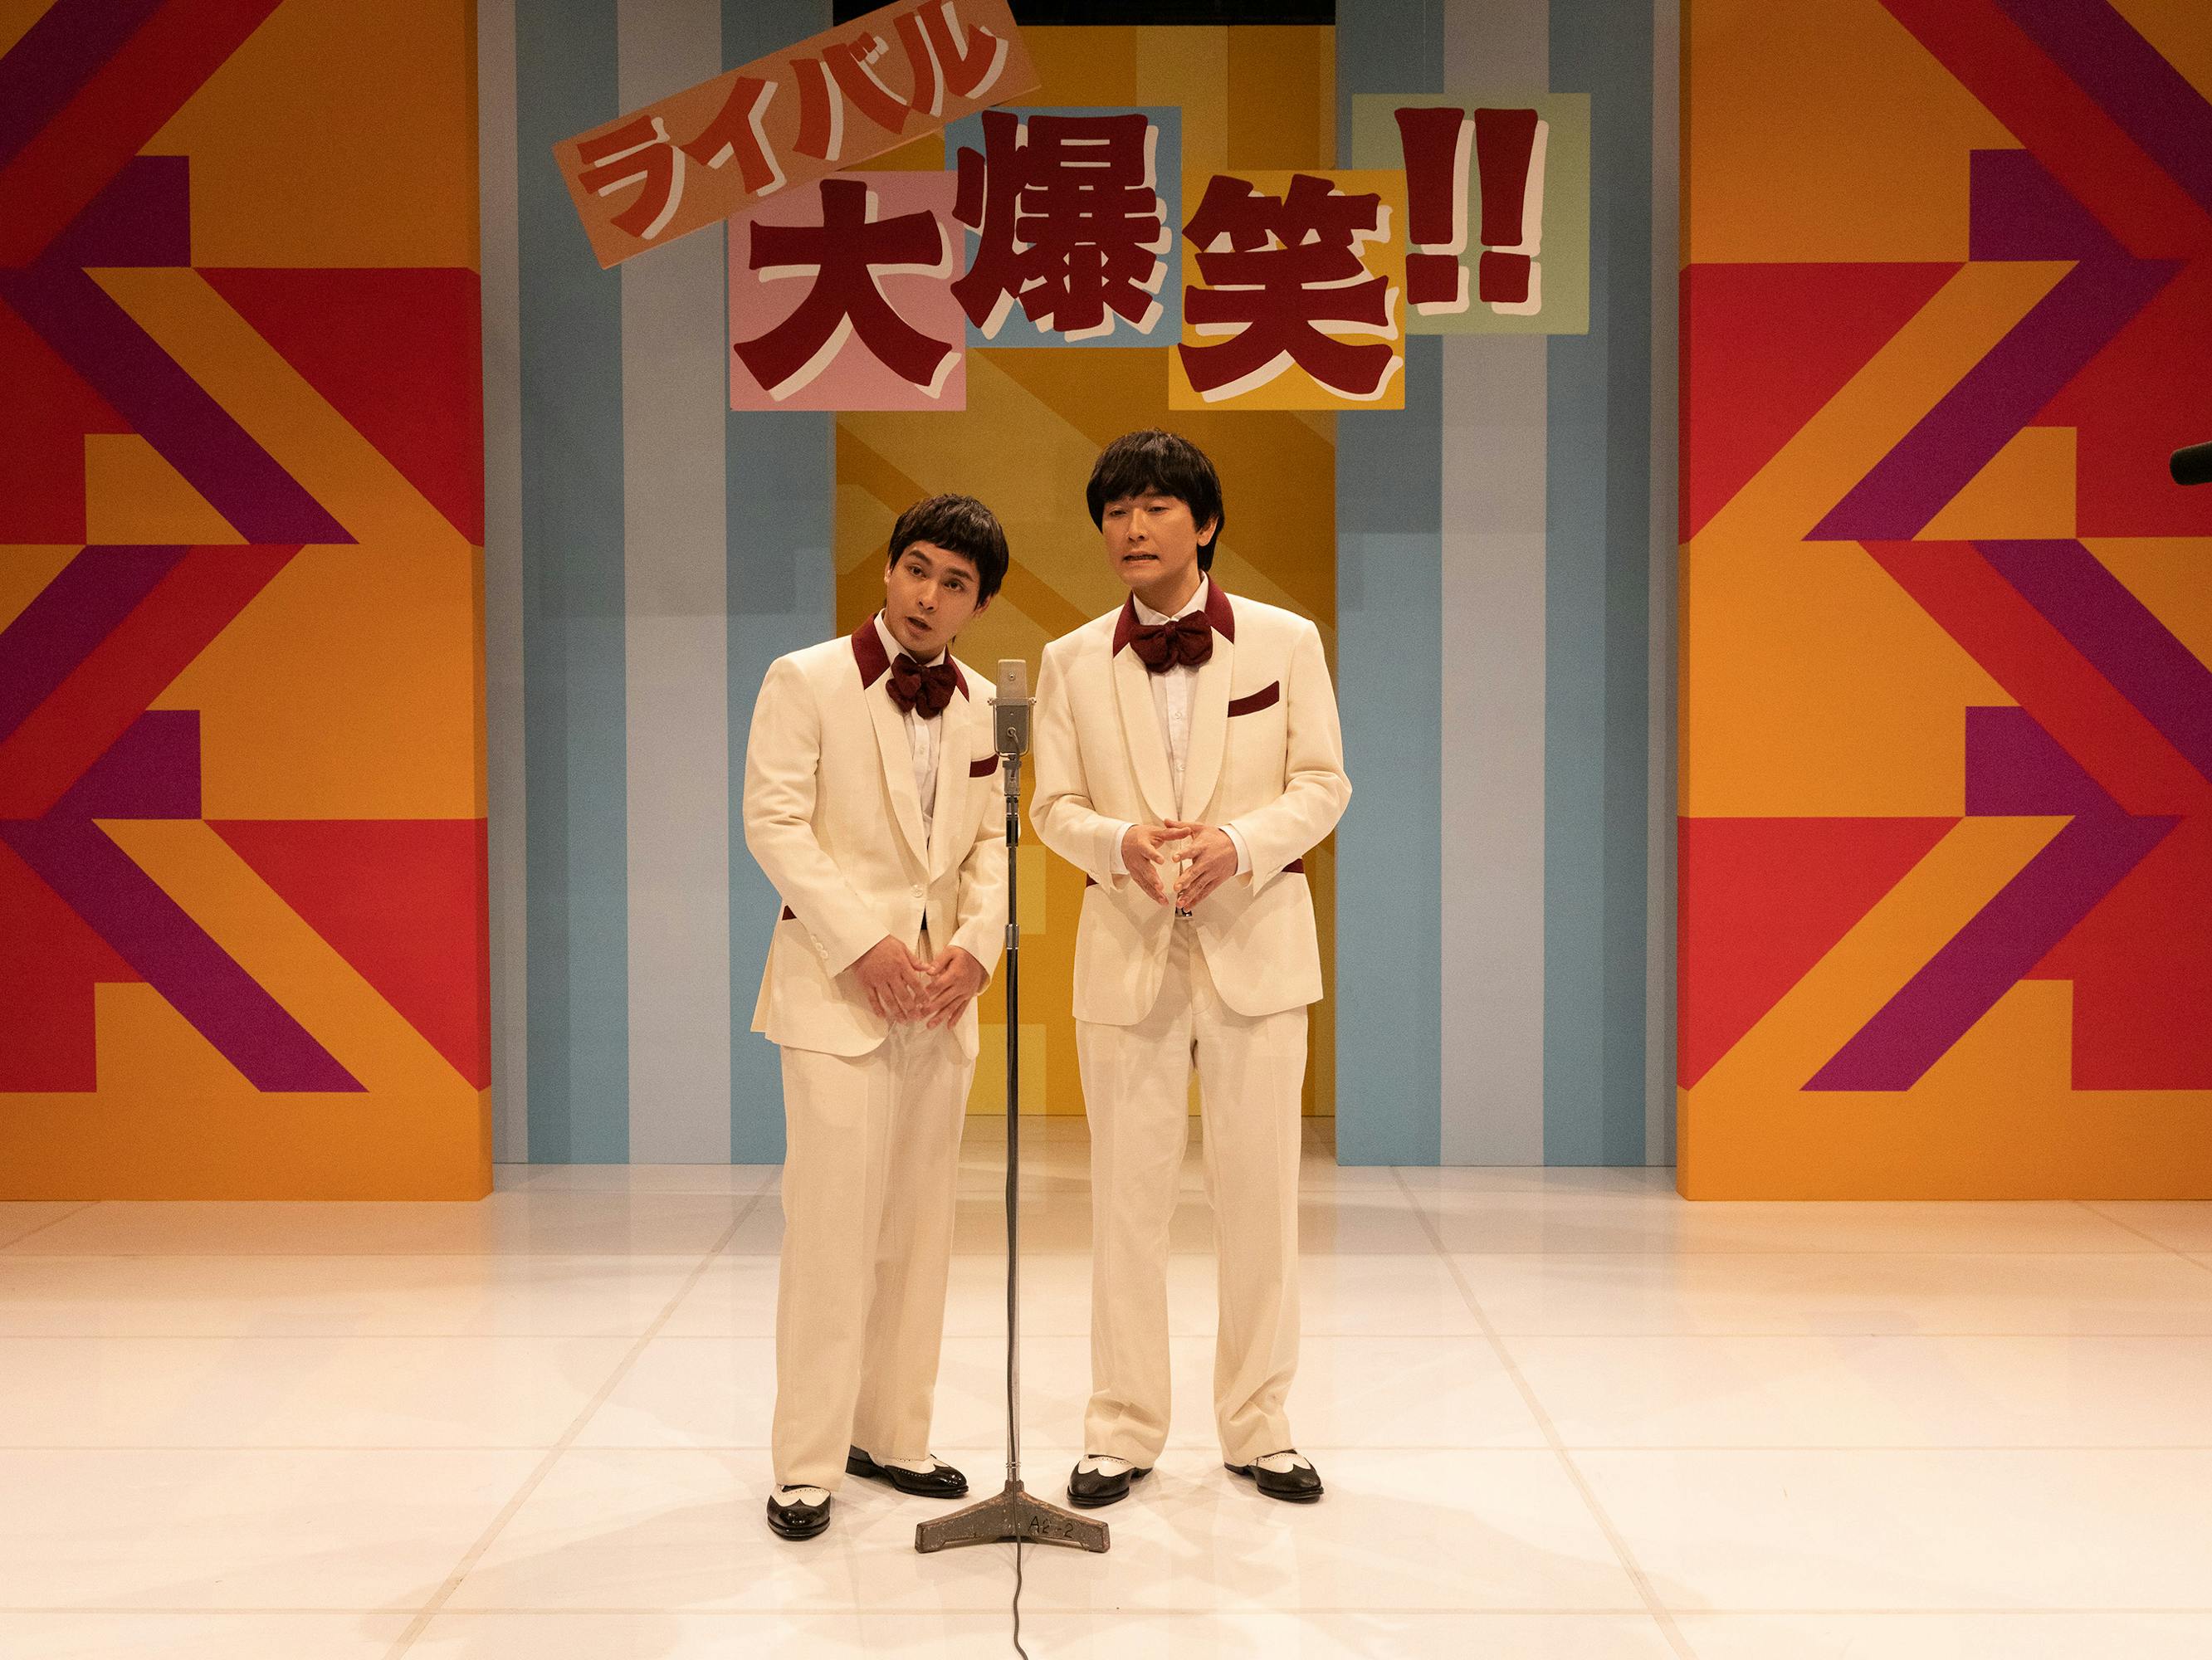 Yuya Yagira and Nobuyuki Tsuchiya wear white suits on stage. Behind them the walls are orange, red, and blue. 